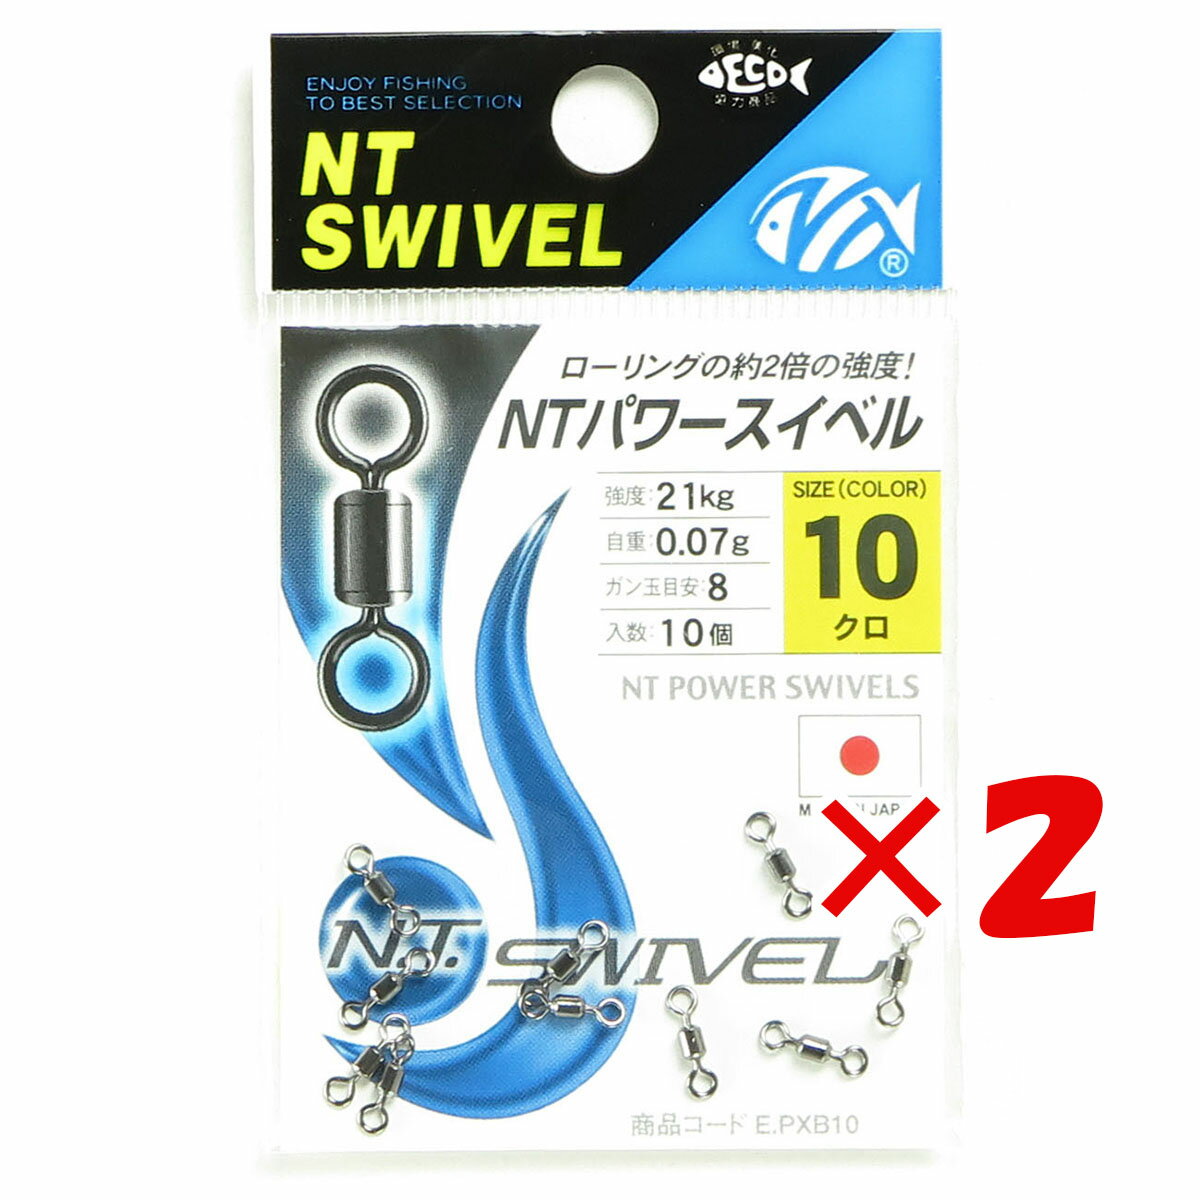  「 NTスイベル N.T.SWIVEL パワースイベル クロ #10 」  釣具 釣り具 釣り用品